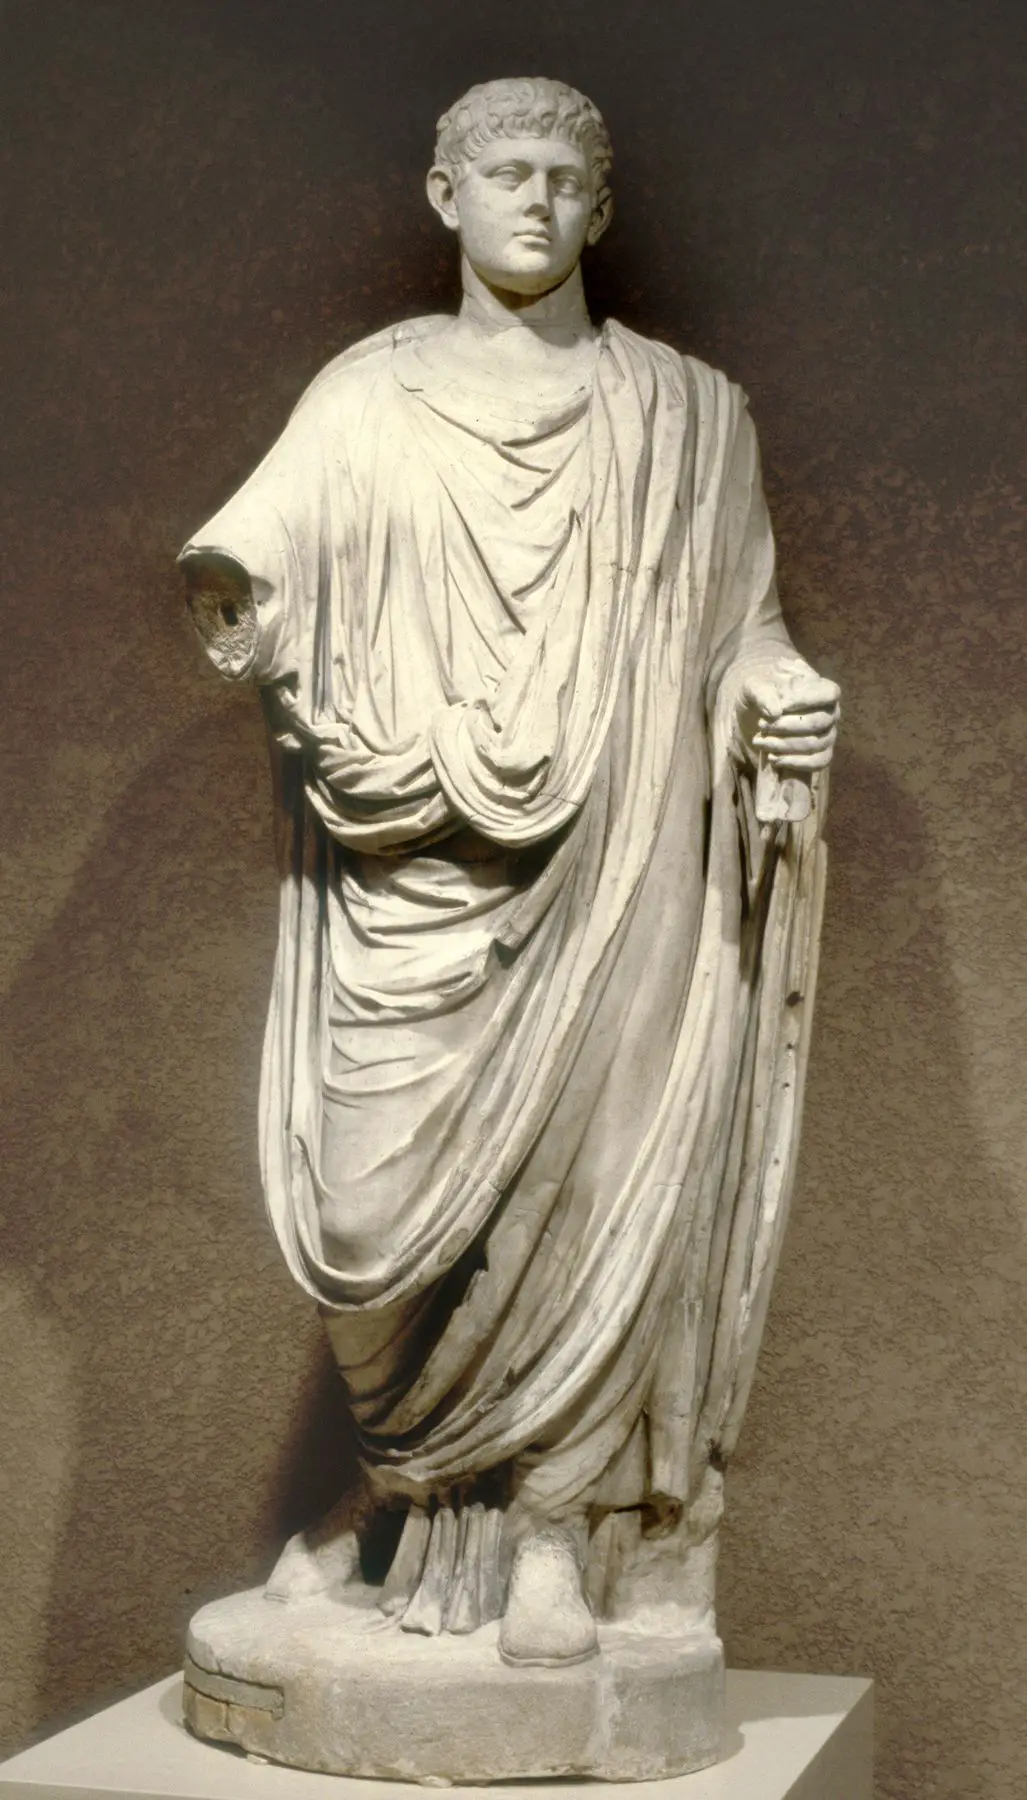 La toga romana, la prenda de vestir más emblemática de Roma